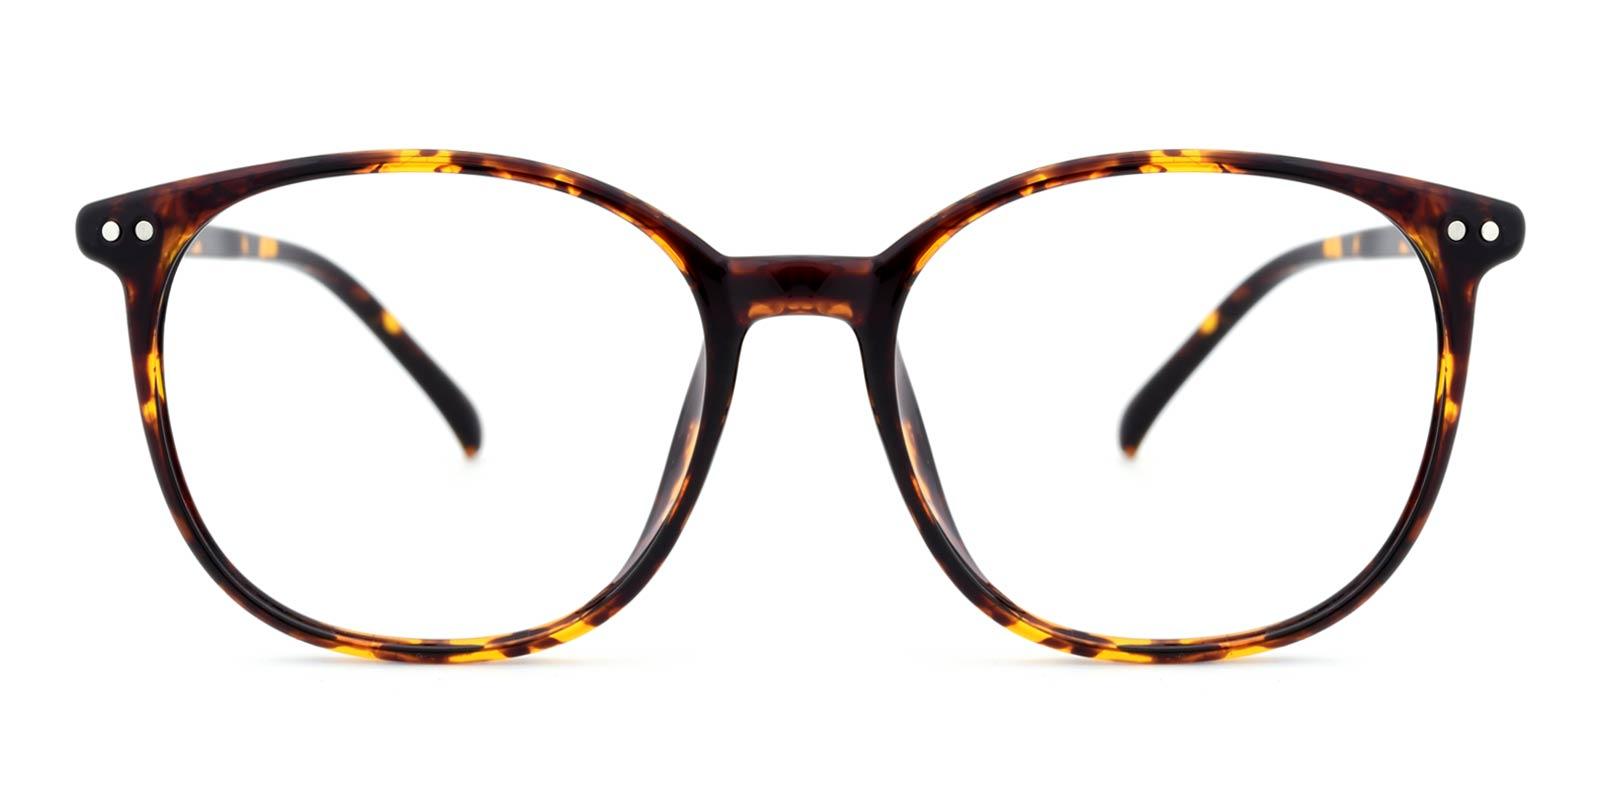 Julian-Tortoise-Round / Square-TR-Eyeglasses-detail